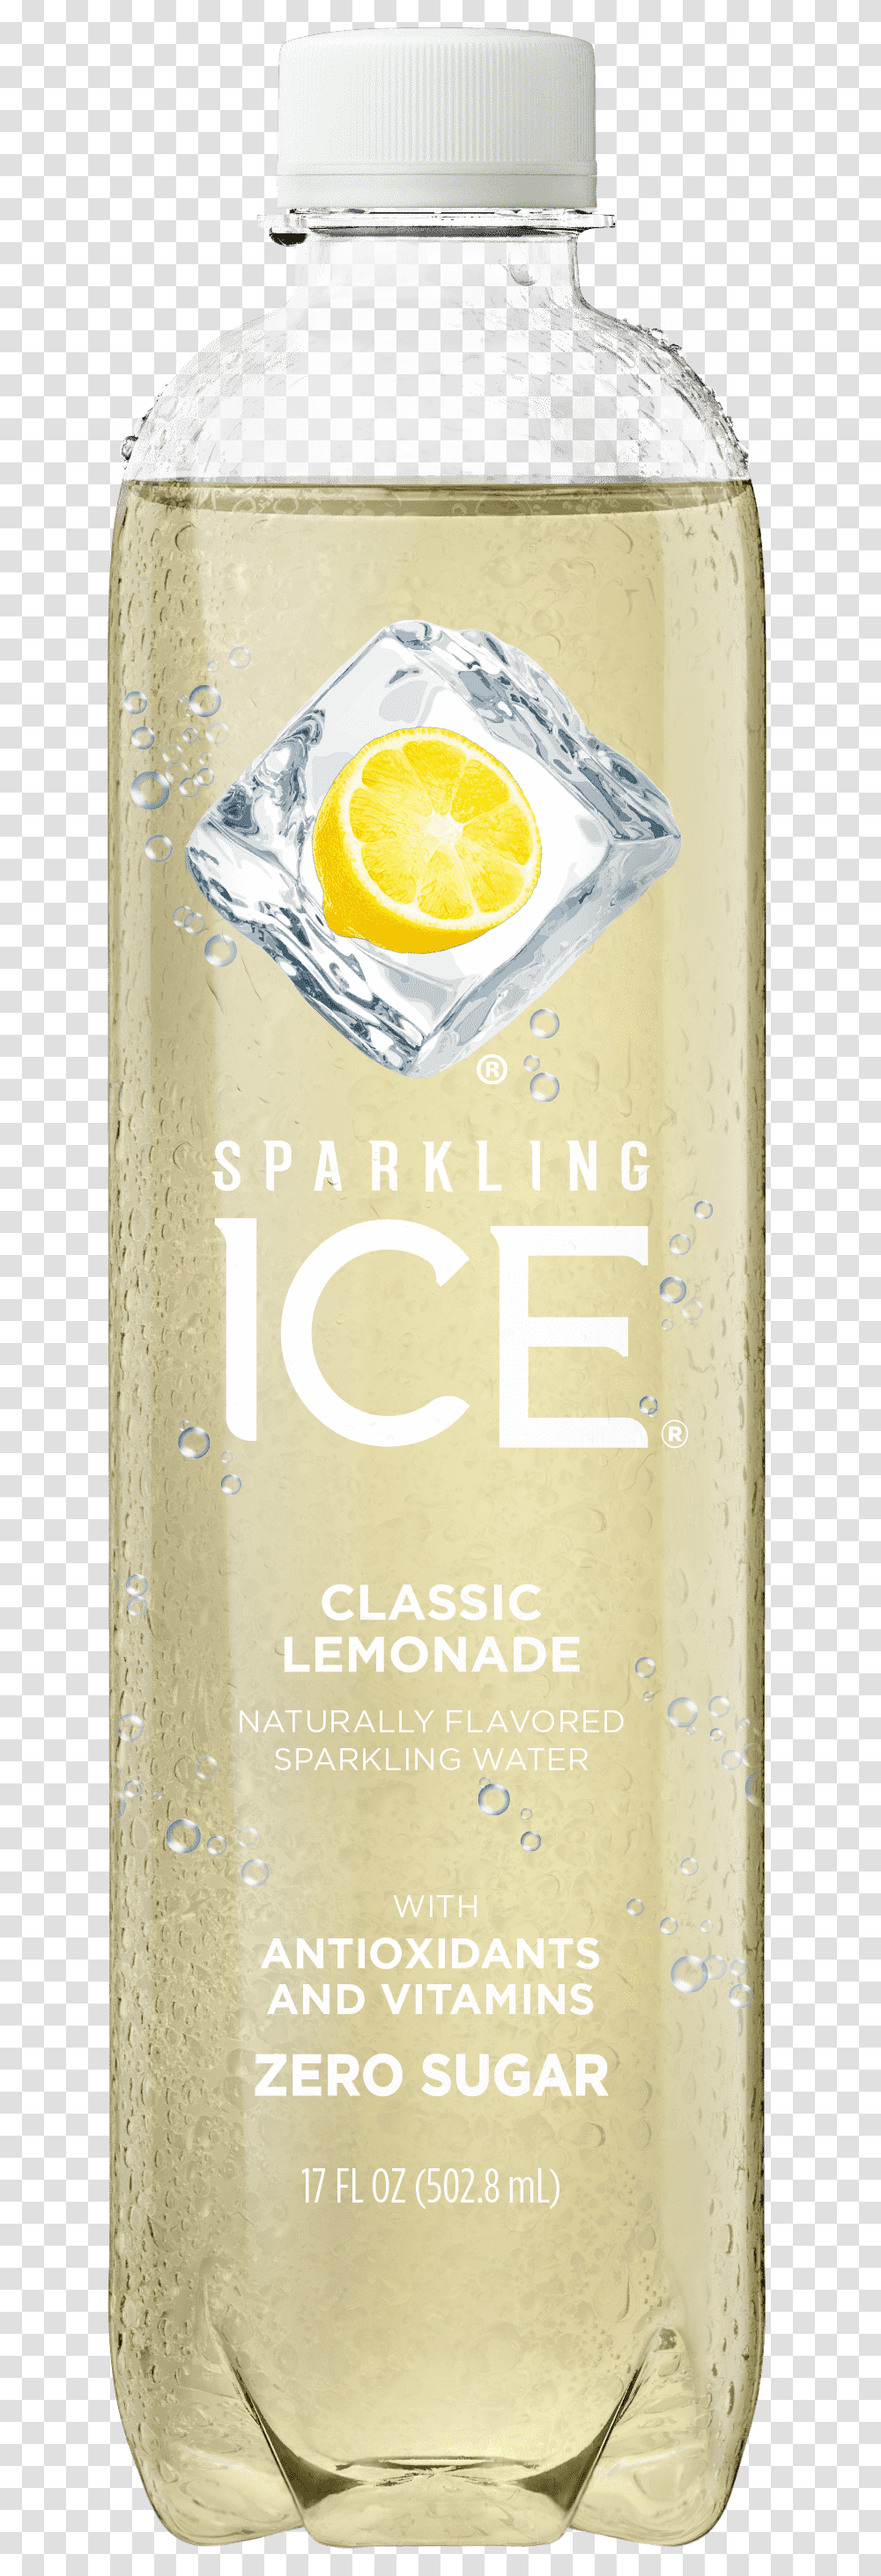 Sparkling Ice Classic Lemonade, Liquor, Alcohol, Beverage, Bottle Transparent Png